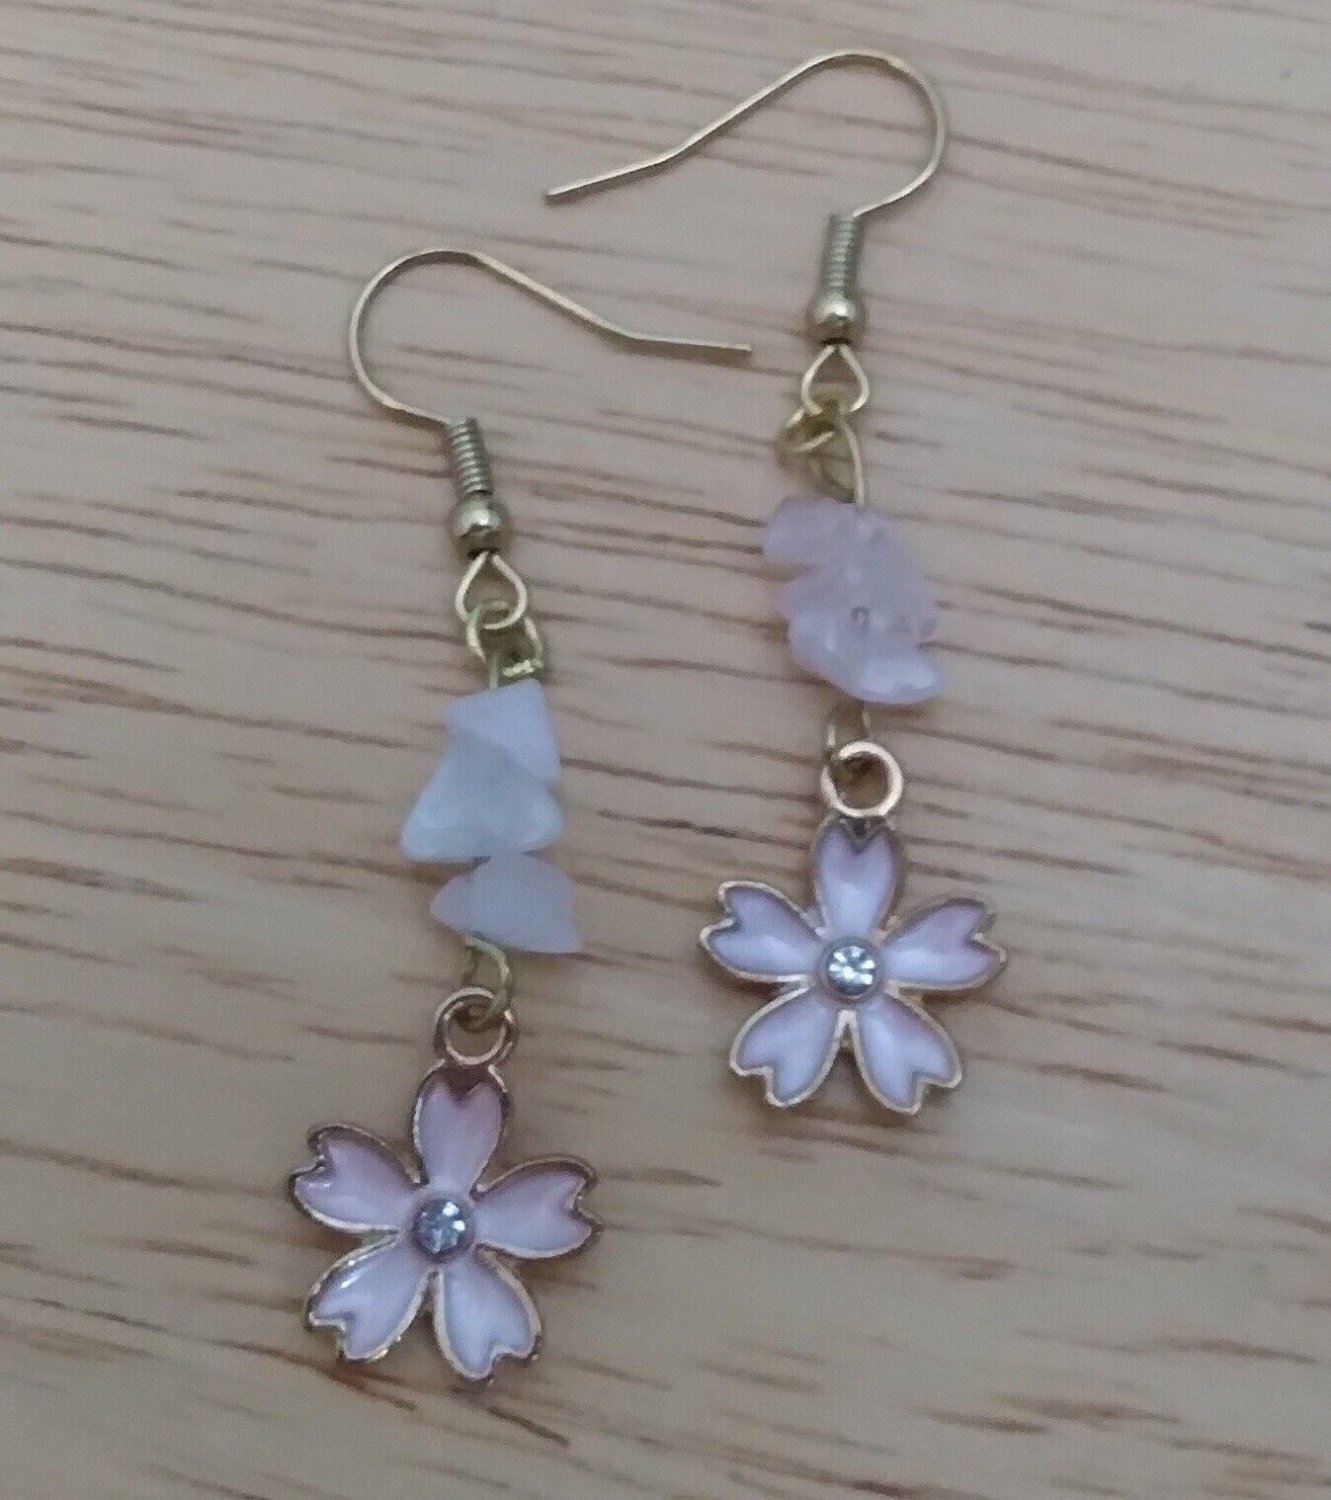 Rose Quartz Chip Bead & Flower Pink Healing Gemstone Drop Dangle Earrings